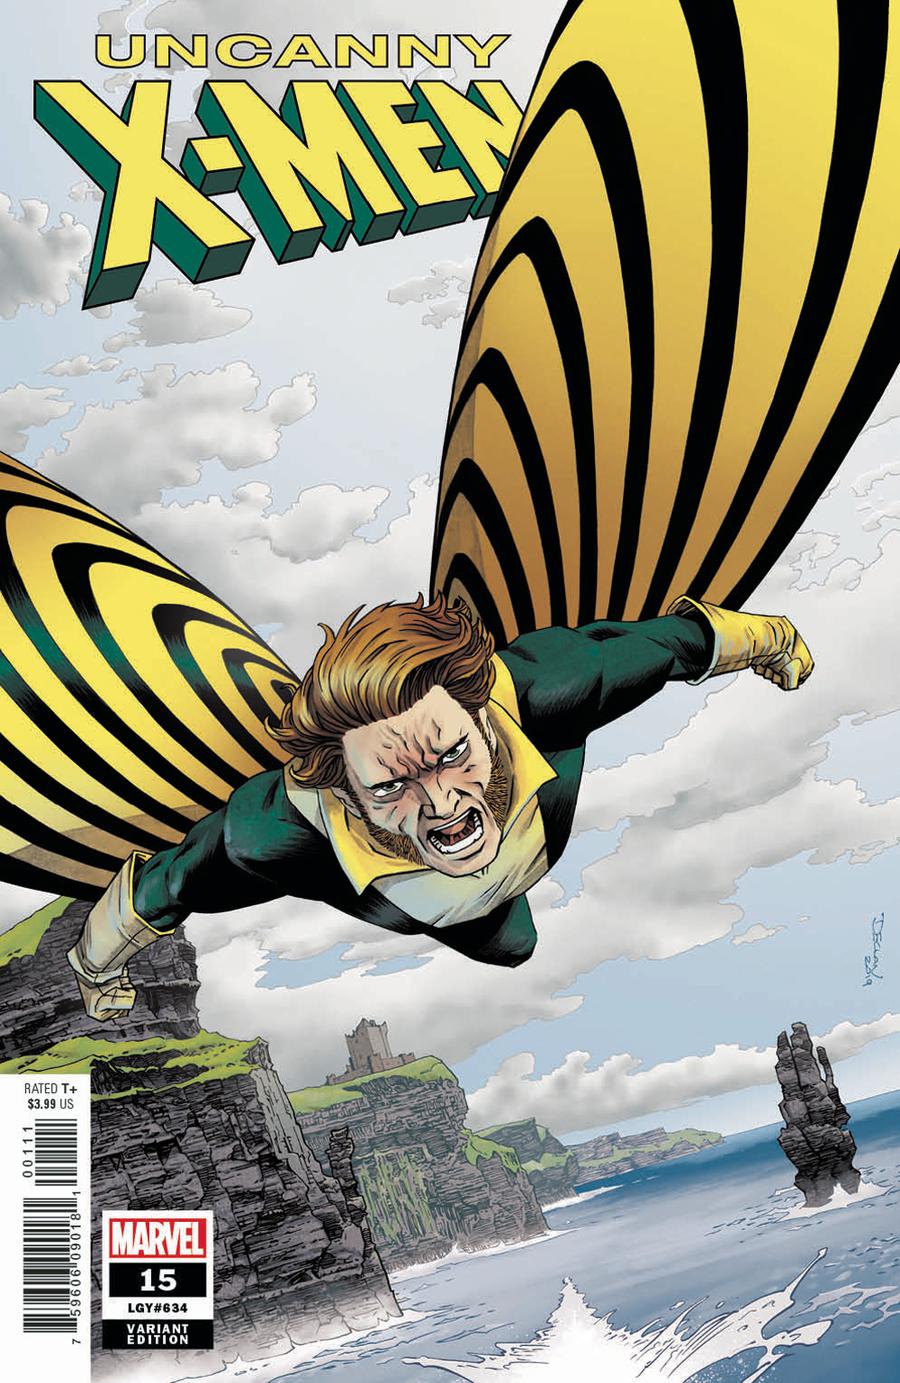 Uncanny X-Men Vol 5 #15 Cover C Variant Declan Shalvey Character Cover